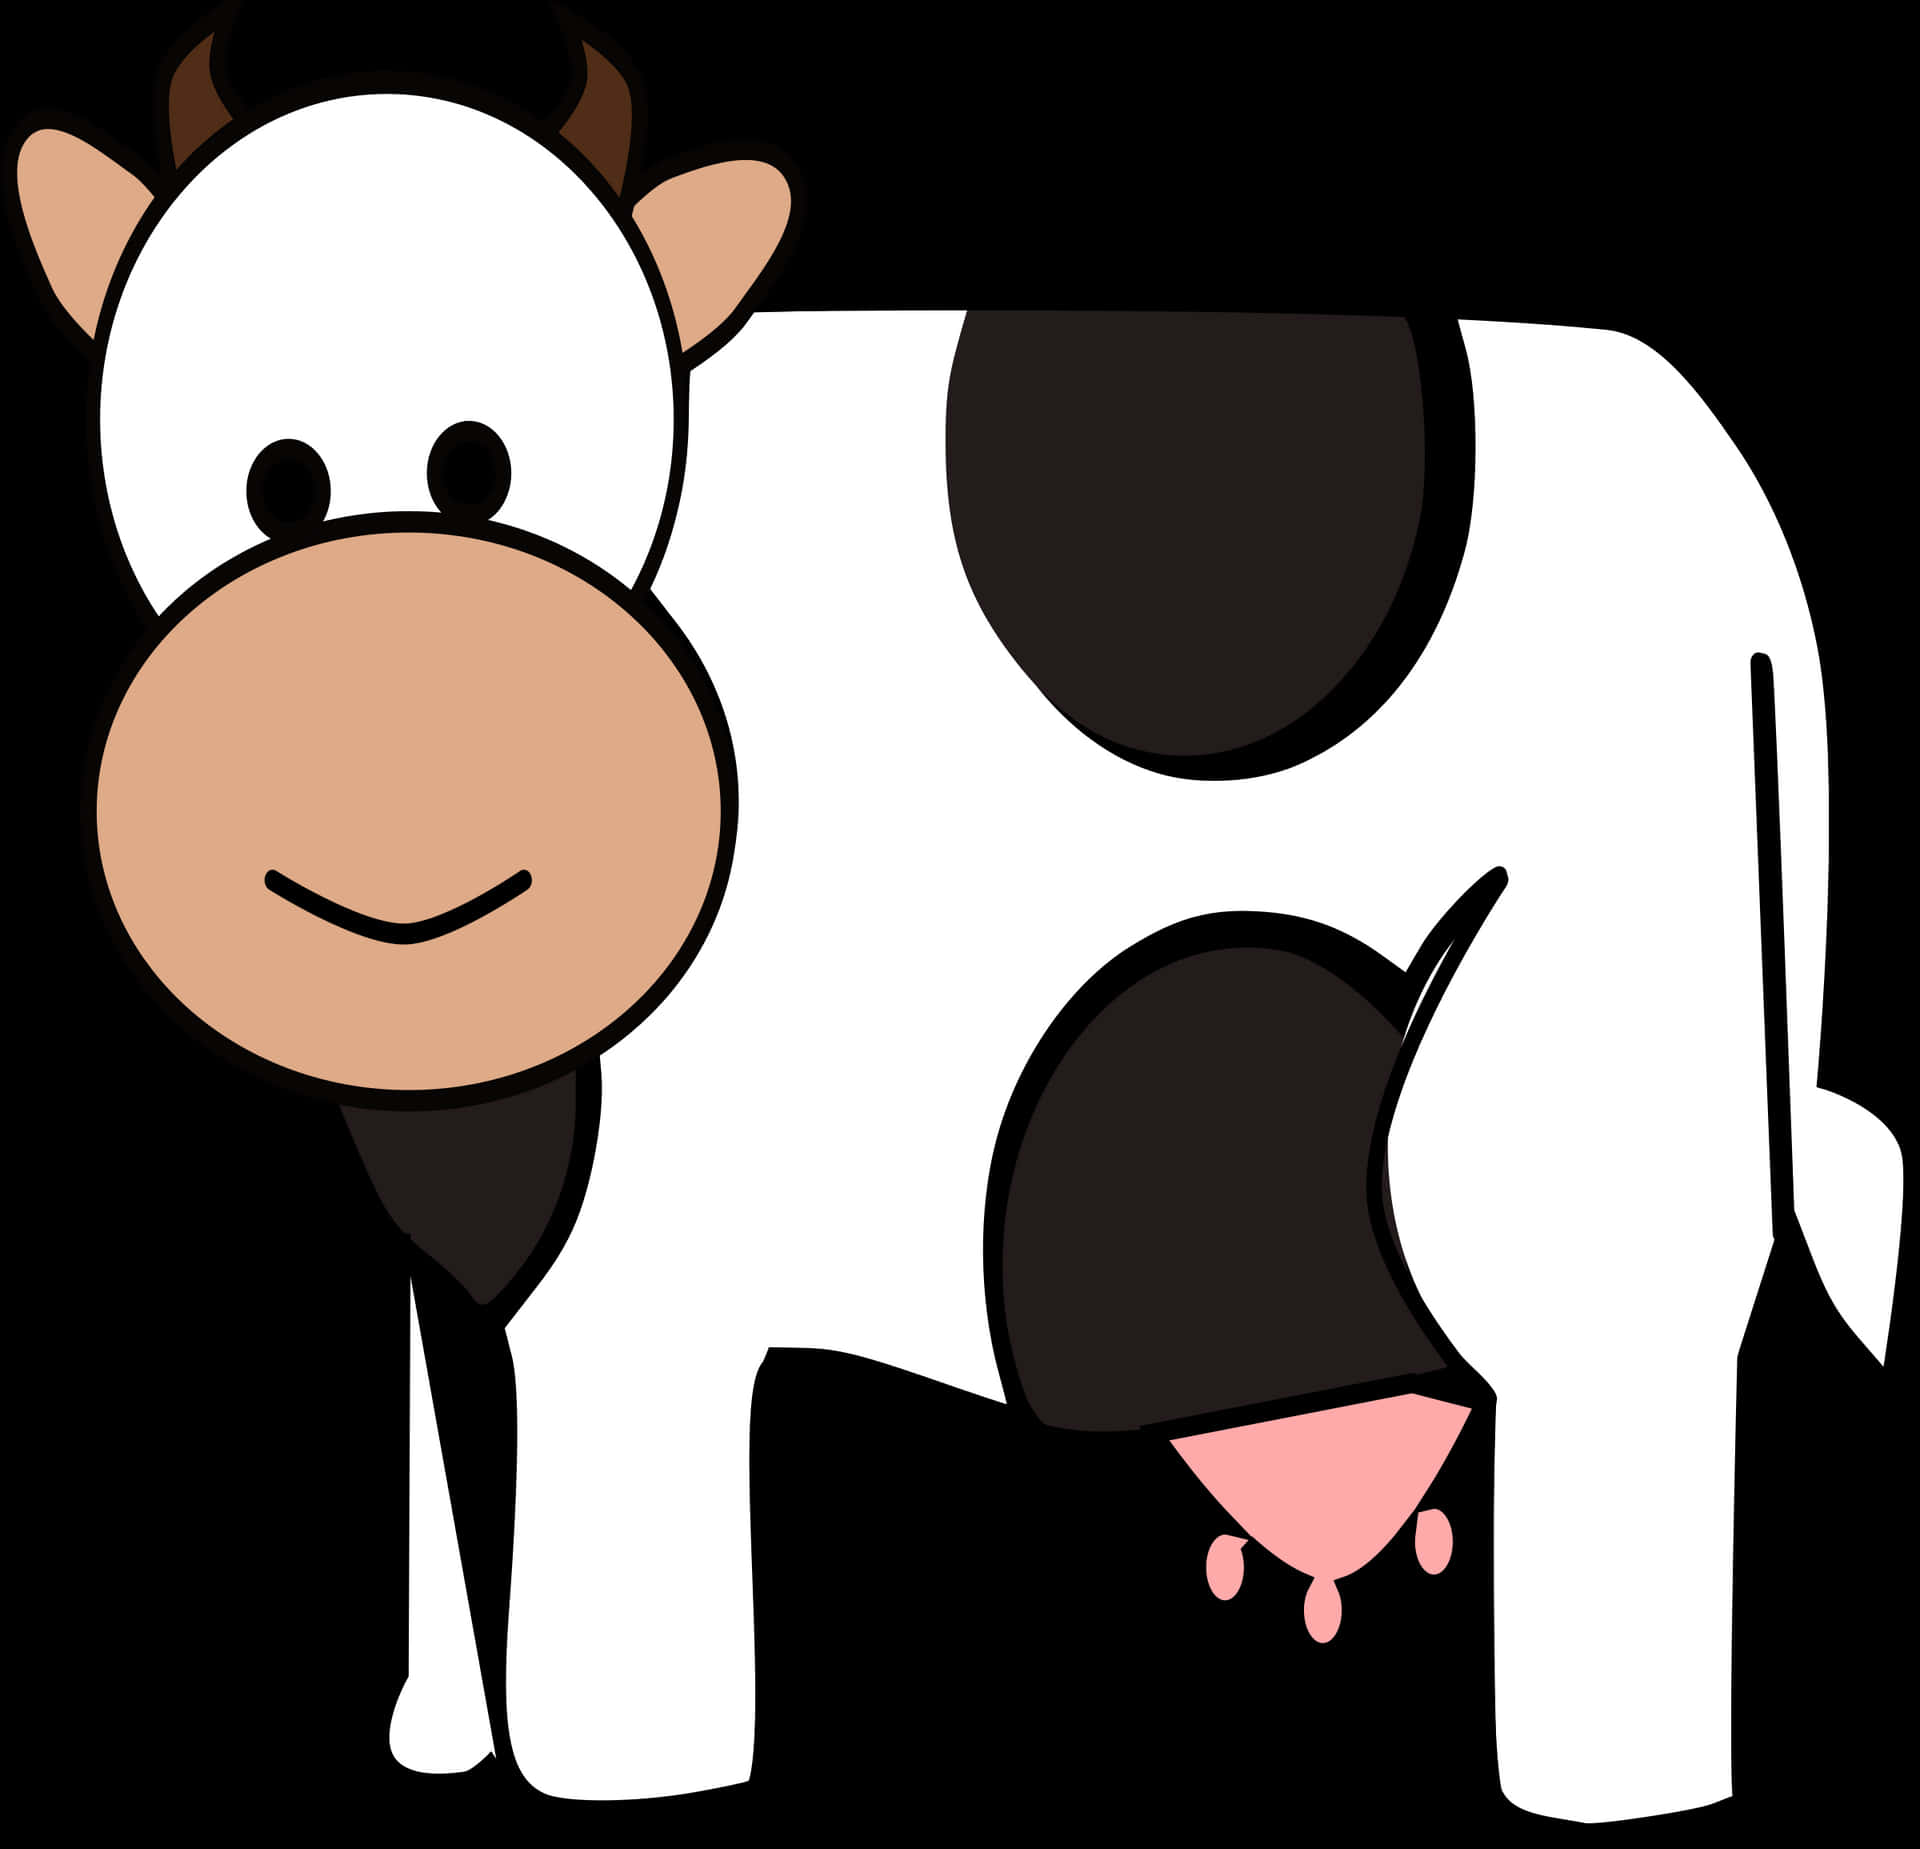 Cartoon Cow Illustration PNG